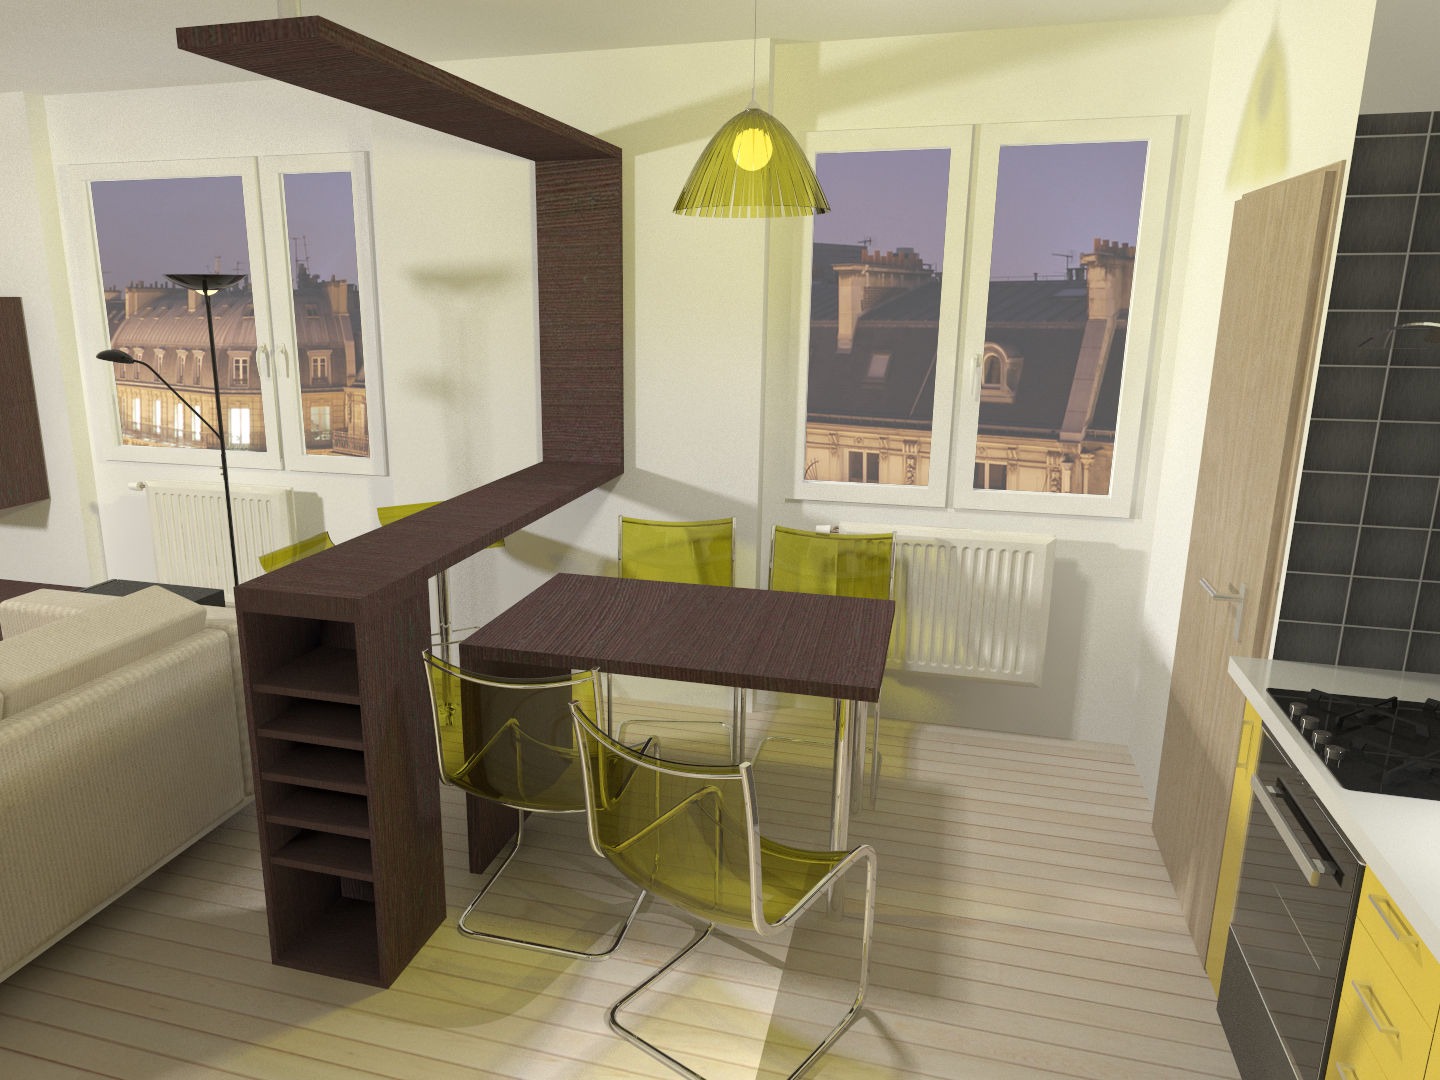 Apartement interior visualisation